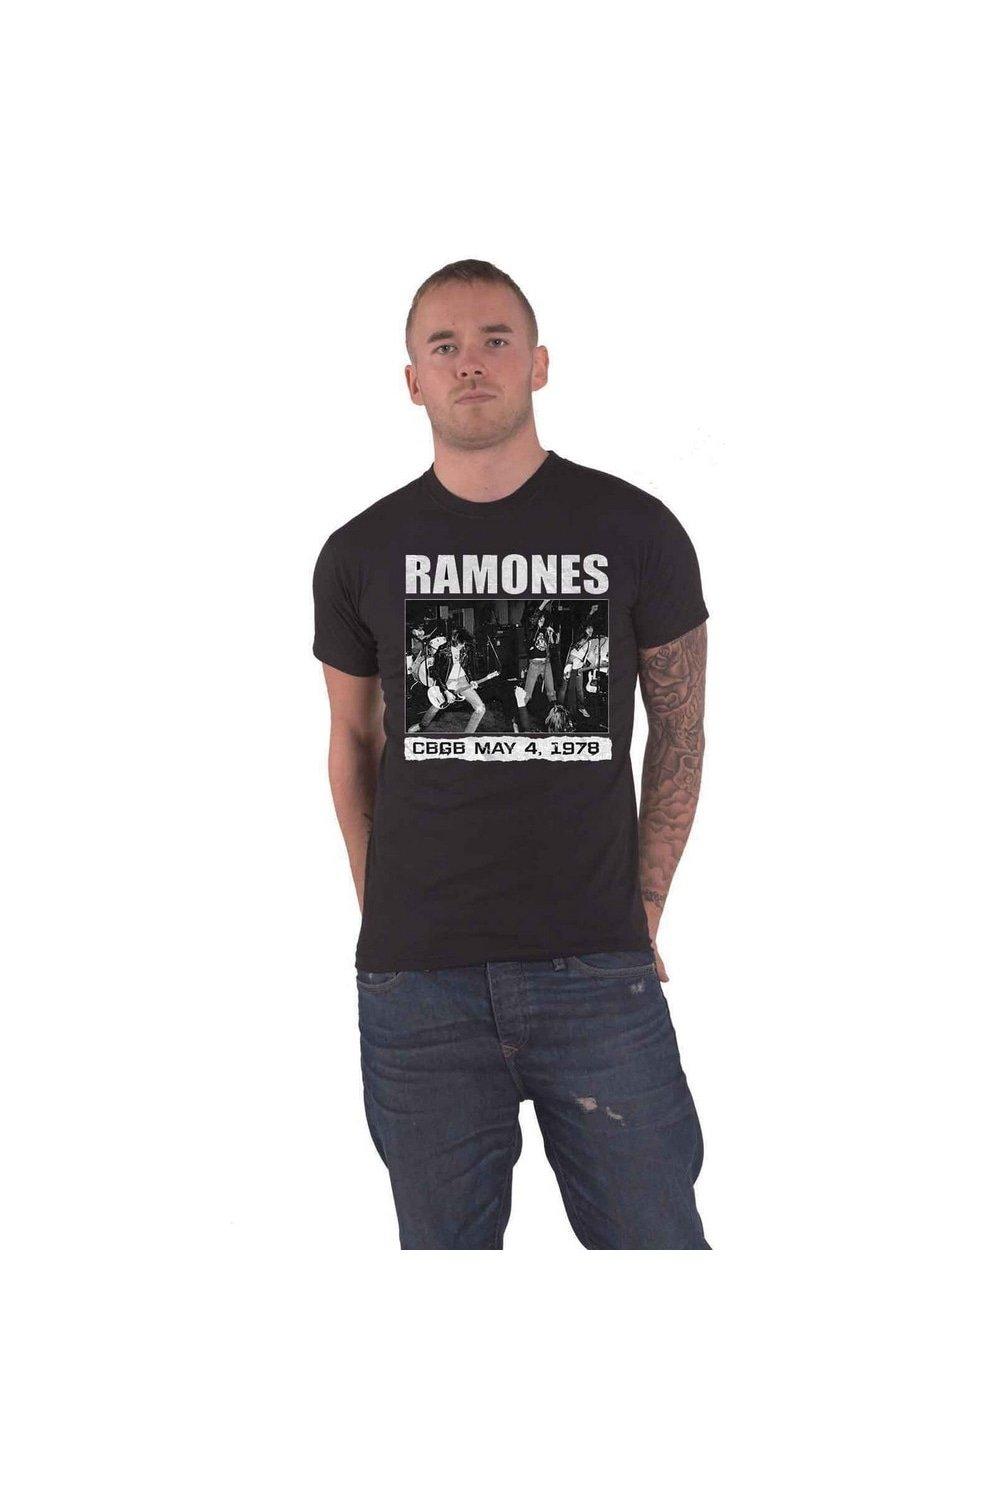 officially licensed cbgb Футболка CBGB 1978 года Ramones, черный